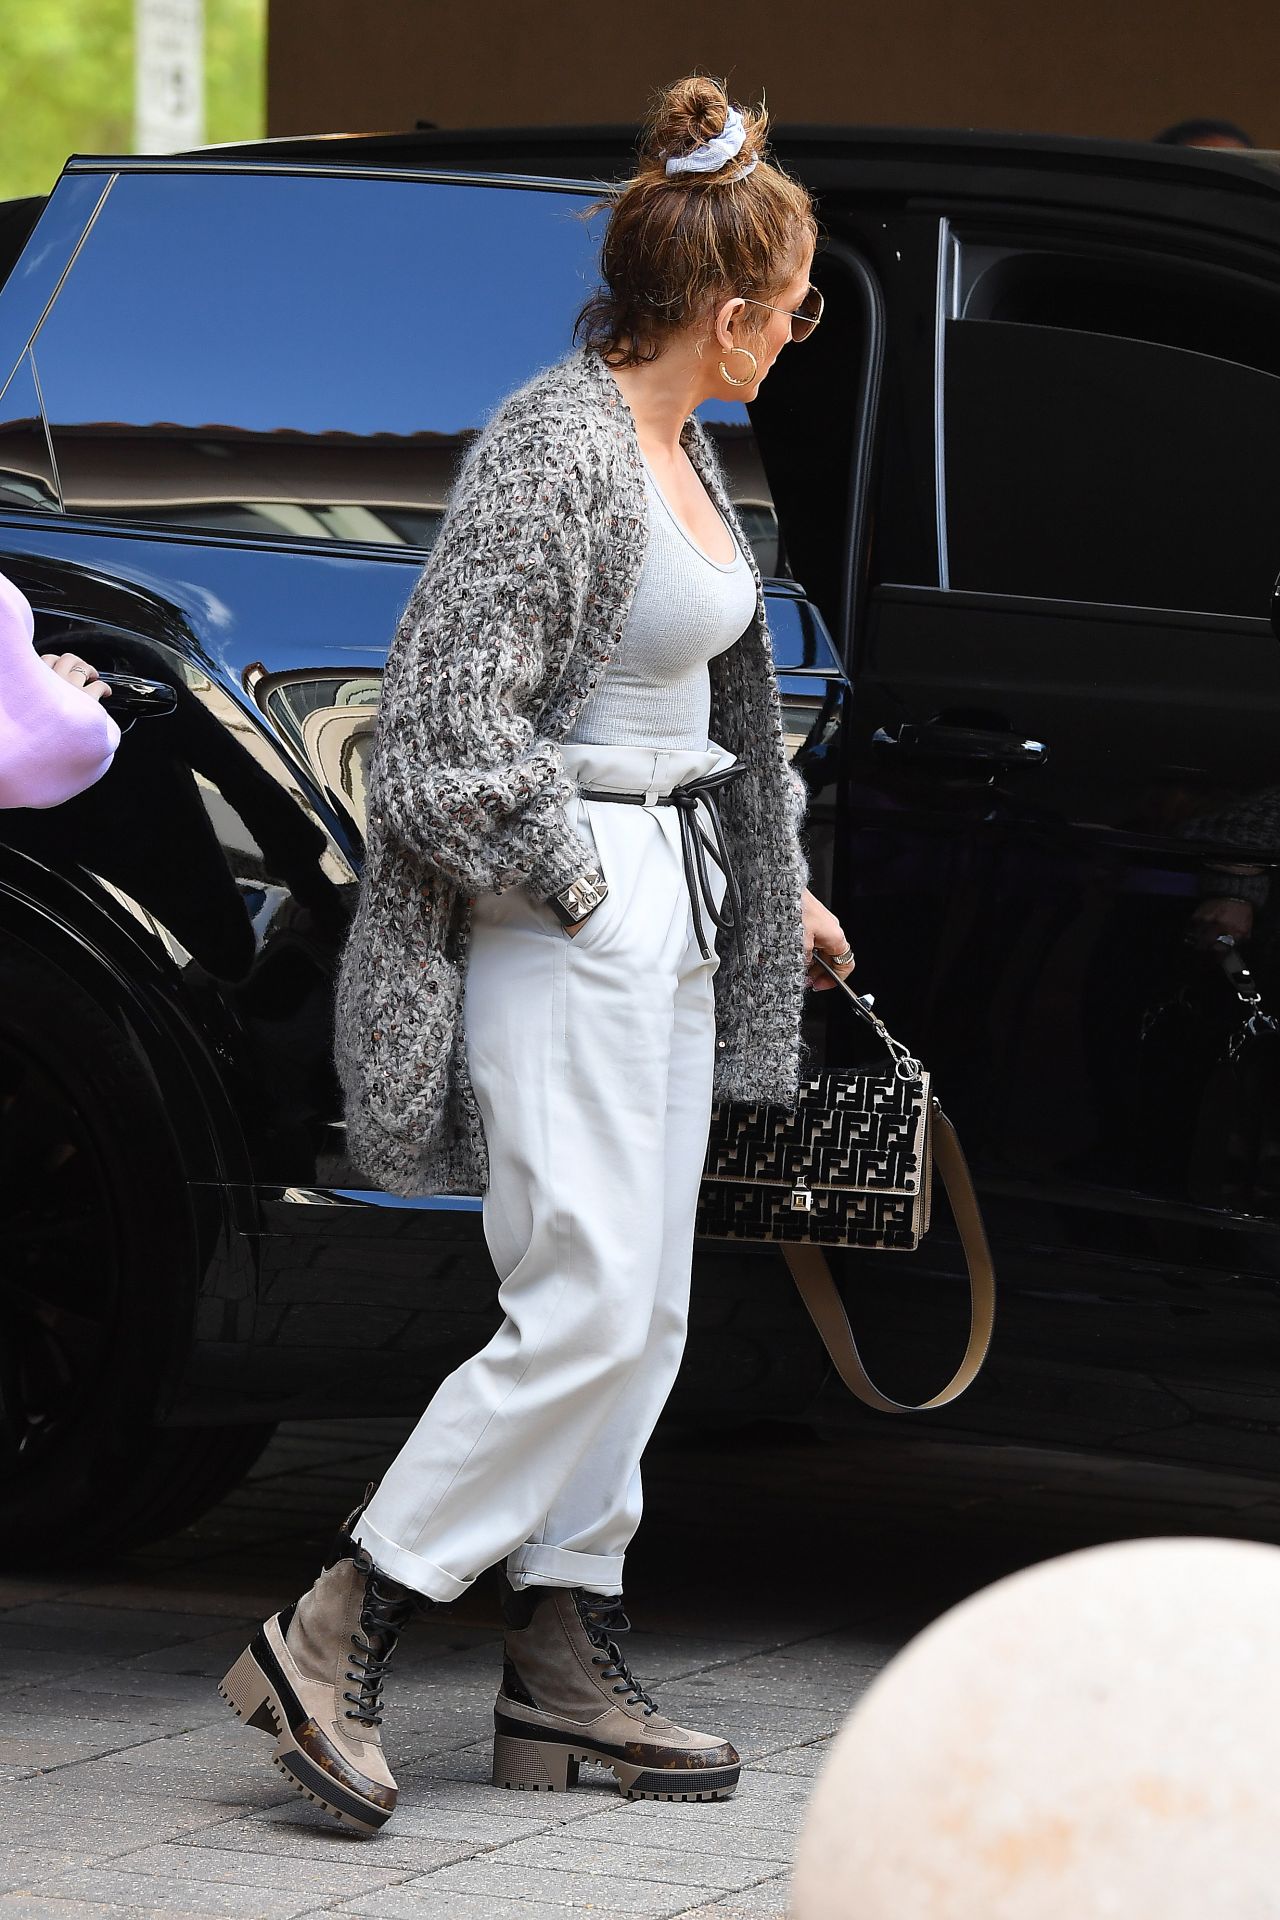 Louis Vuitton Platform Laureate Desert Boots worn by Jennifer Lopez Miami  March 7, 2020